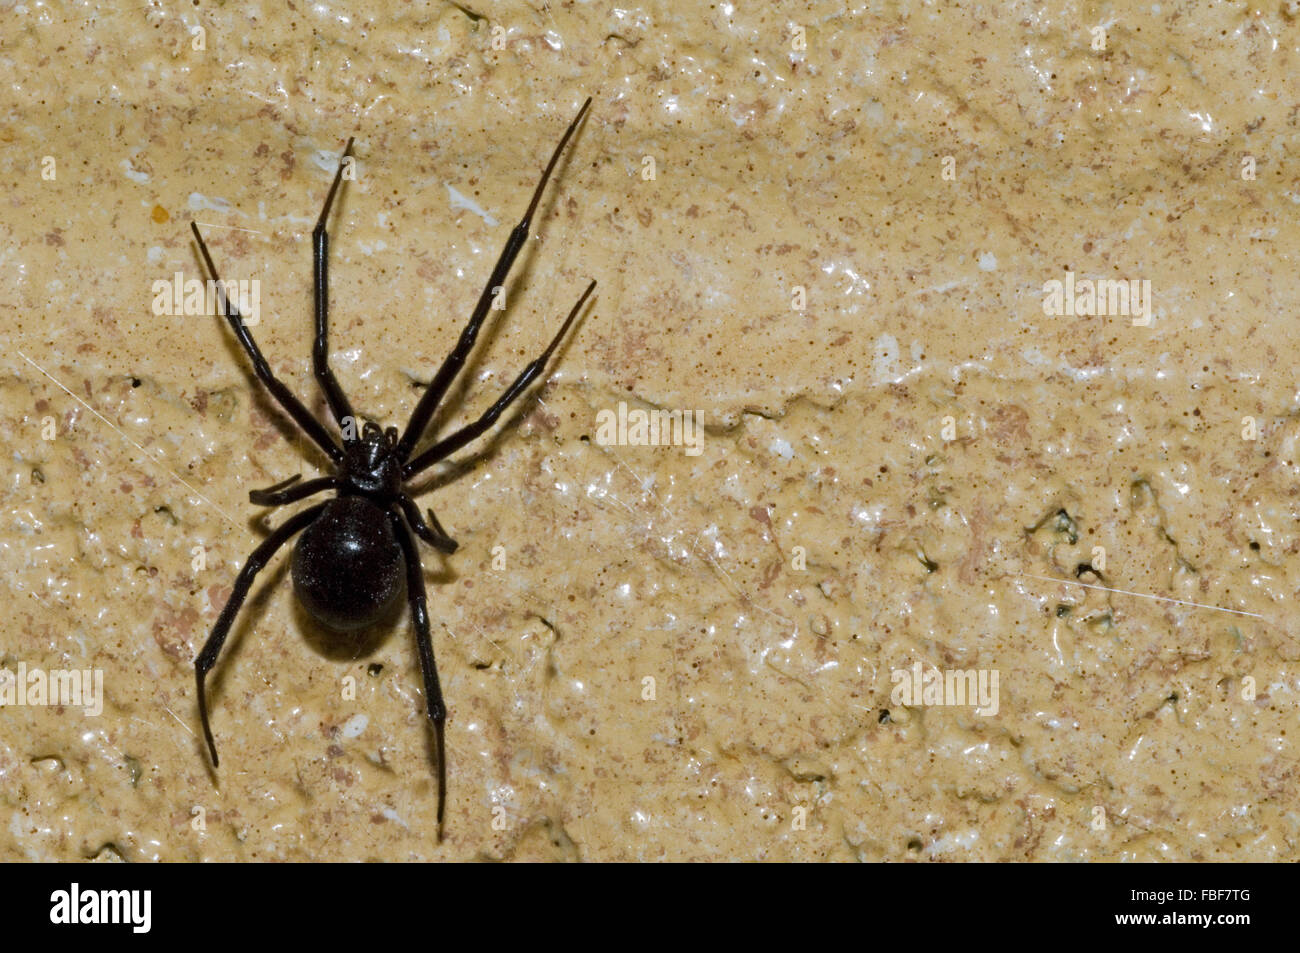 Black spider hi-res stock images - Alamy